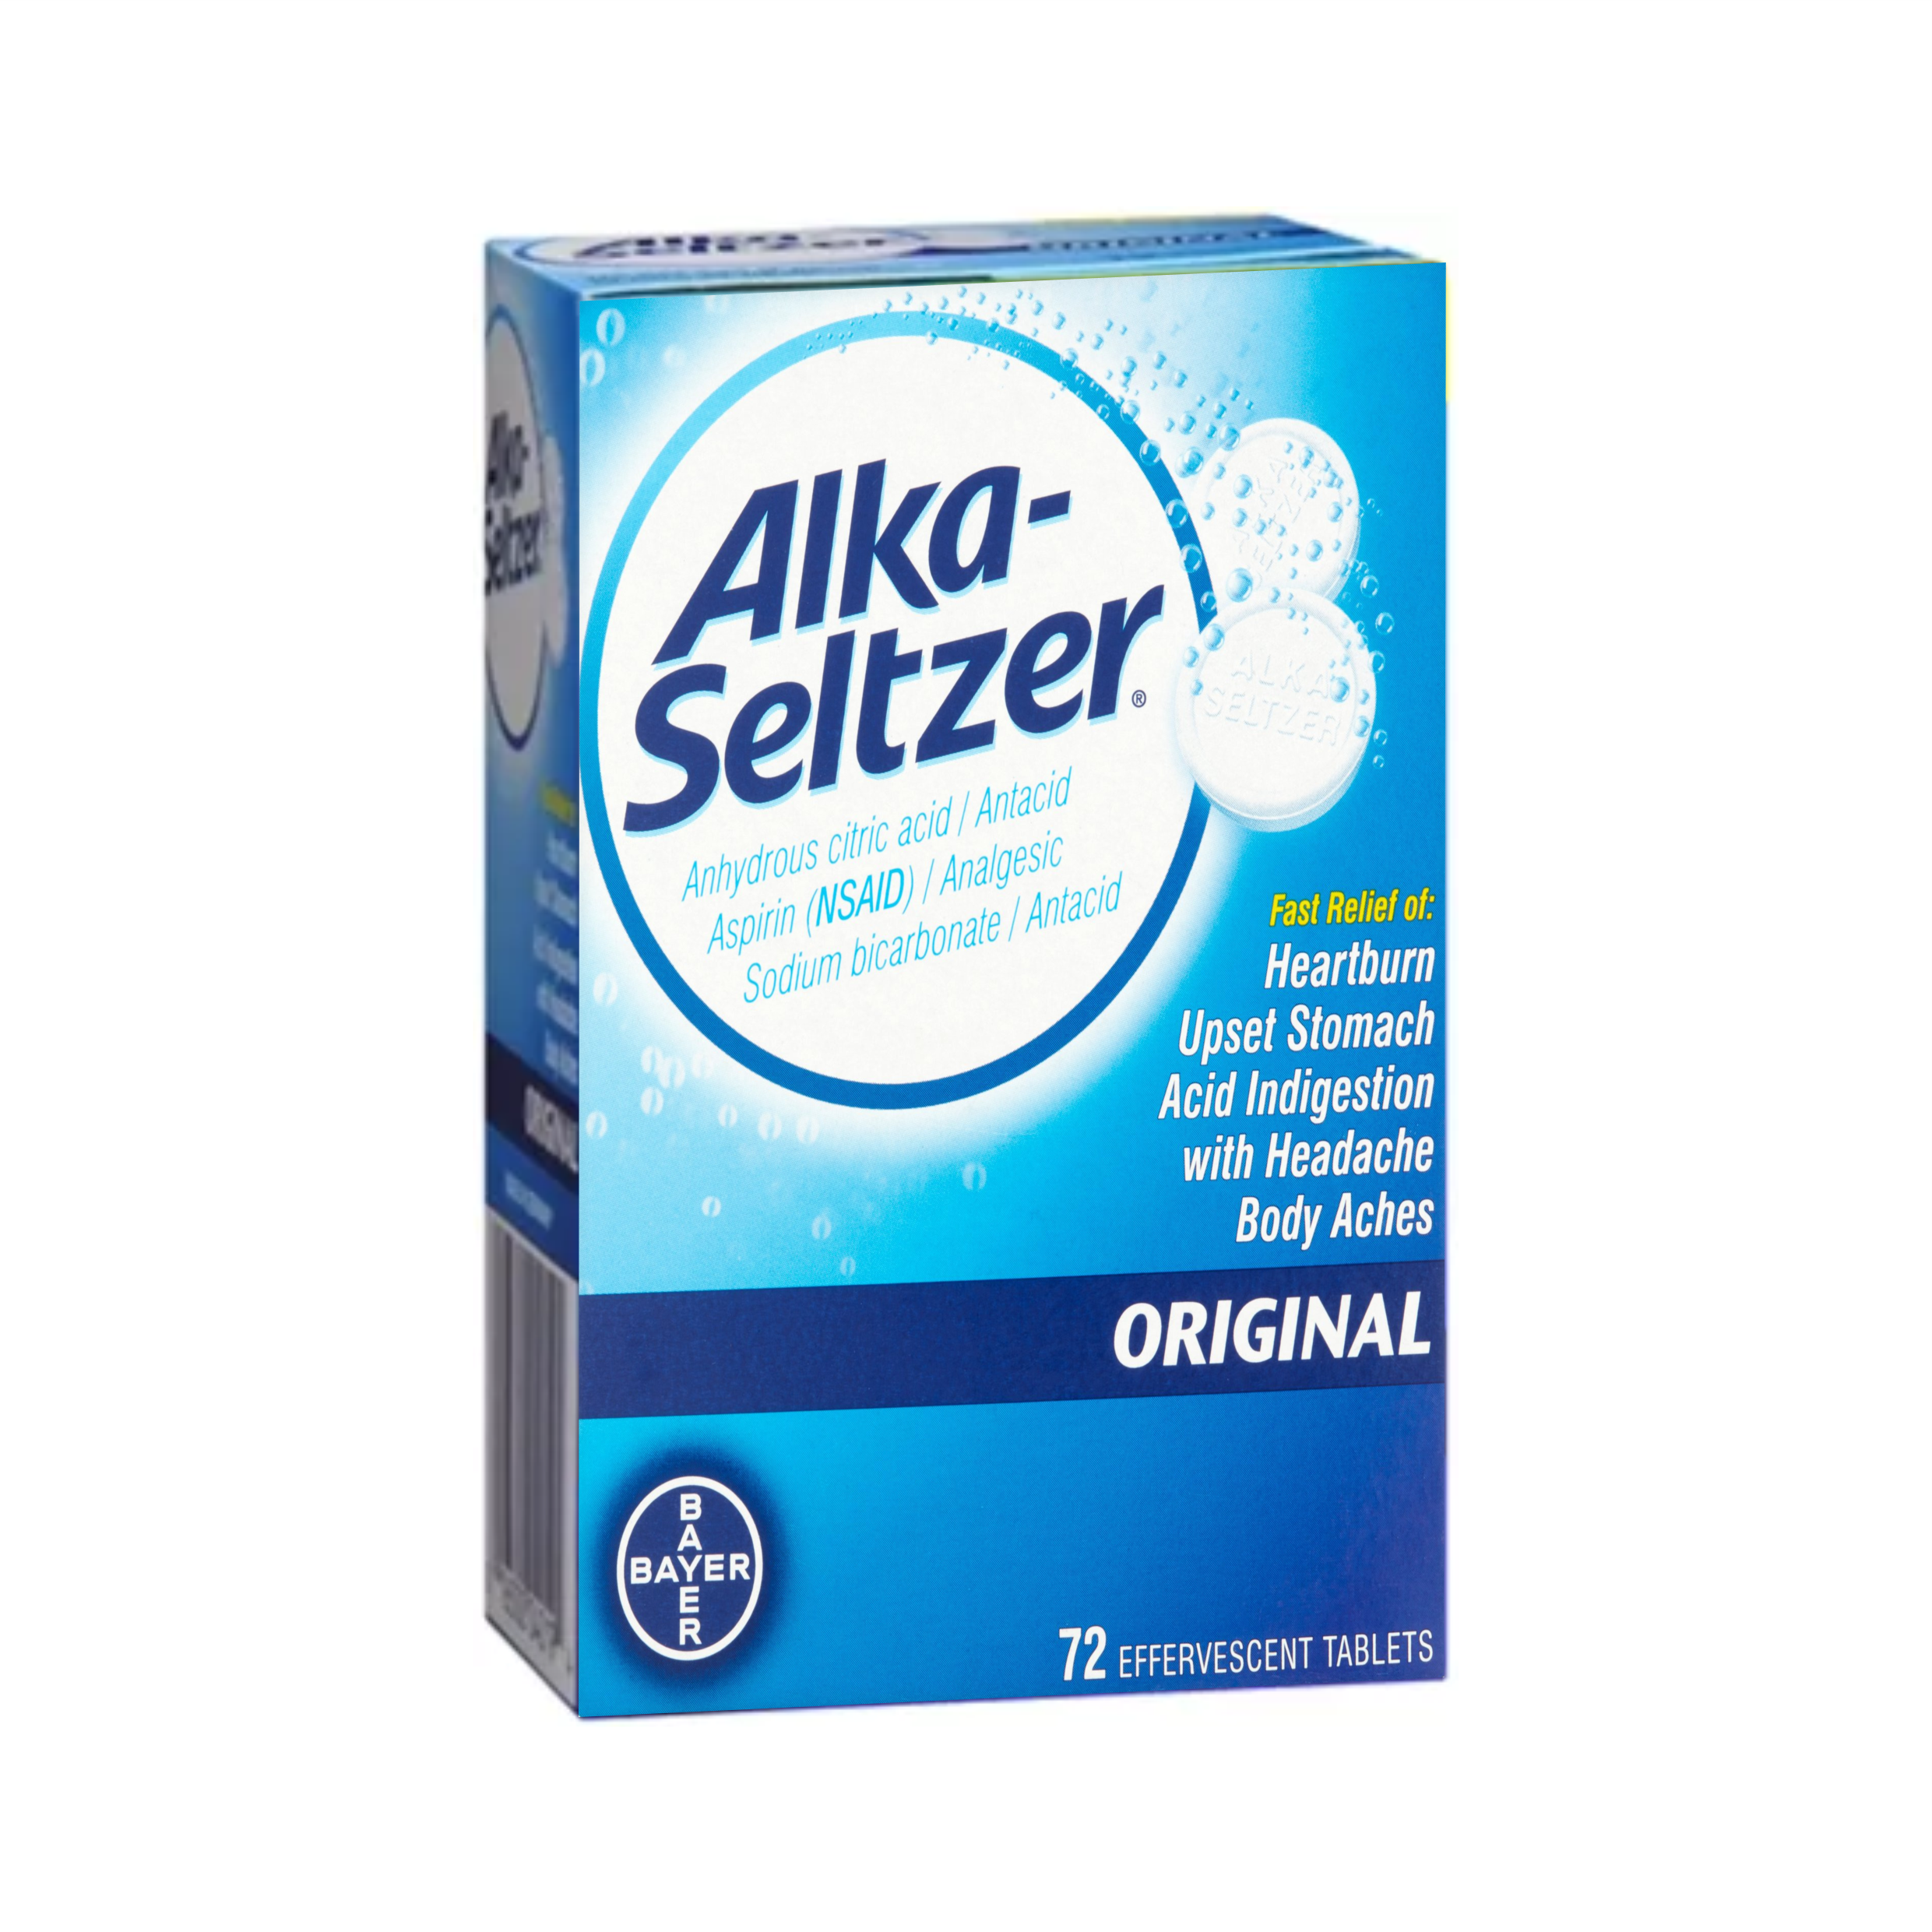 Alka-Seltzer Original 72 Tabletas Efervescentes